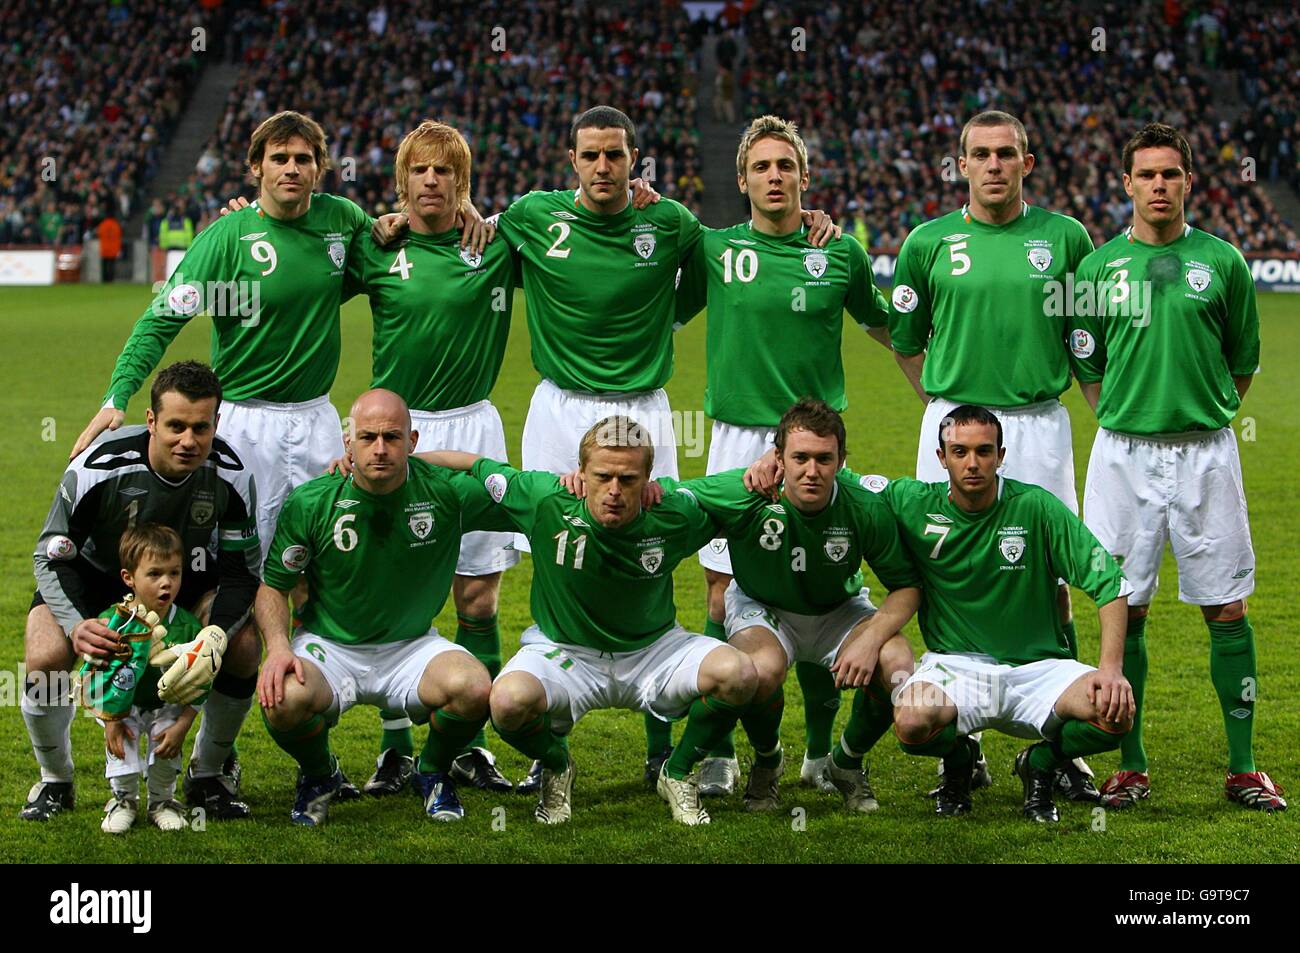 Soccer - UEFA European Championship 2008 Qualifying - Group D - Republic of Ireland v Slovakia - Croke Park. Republic of Ireland team line up before kick off Stock Photo